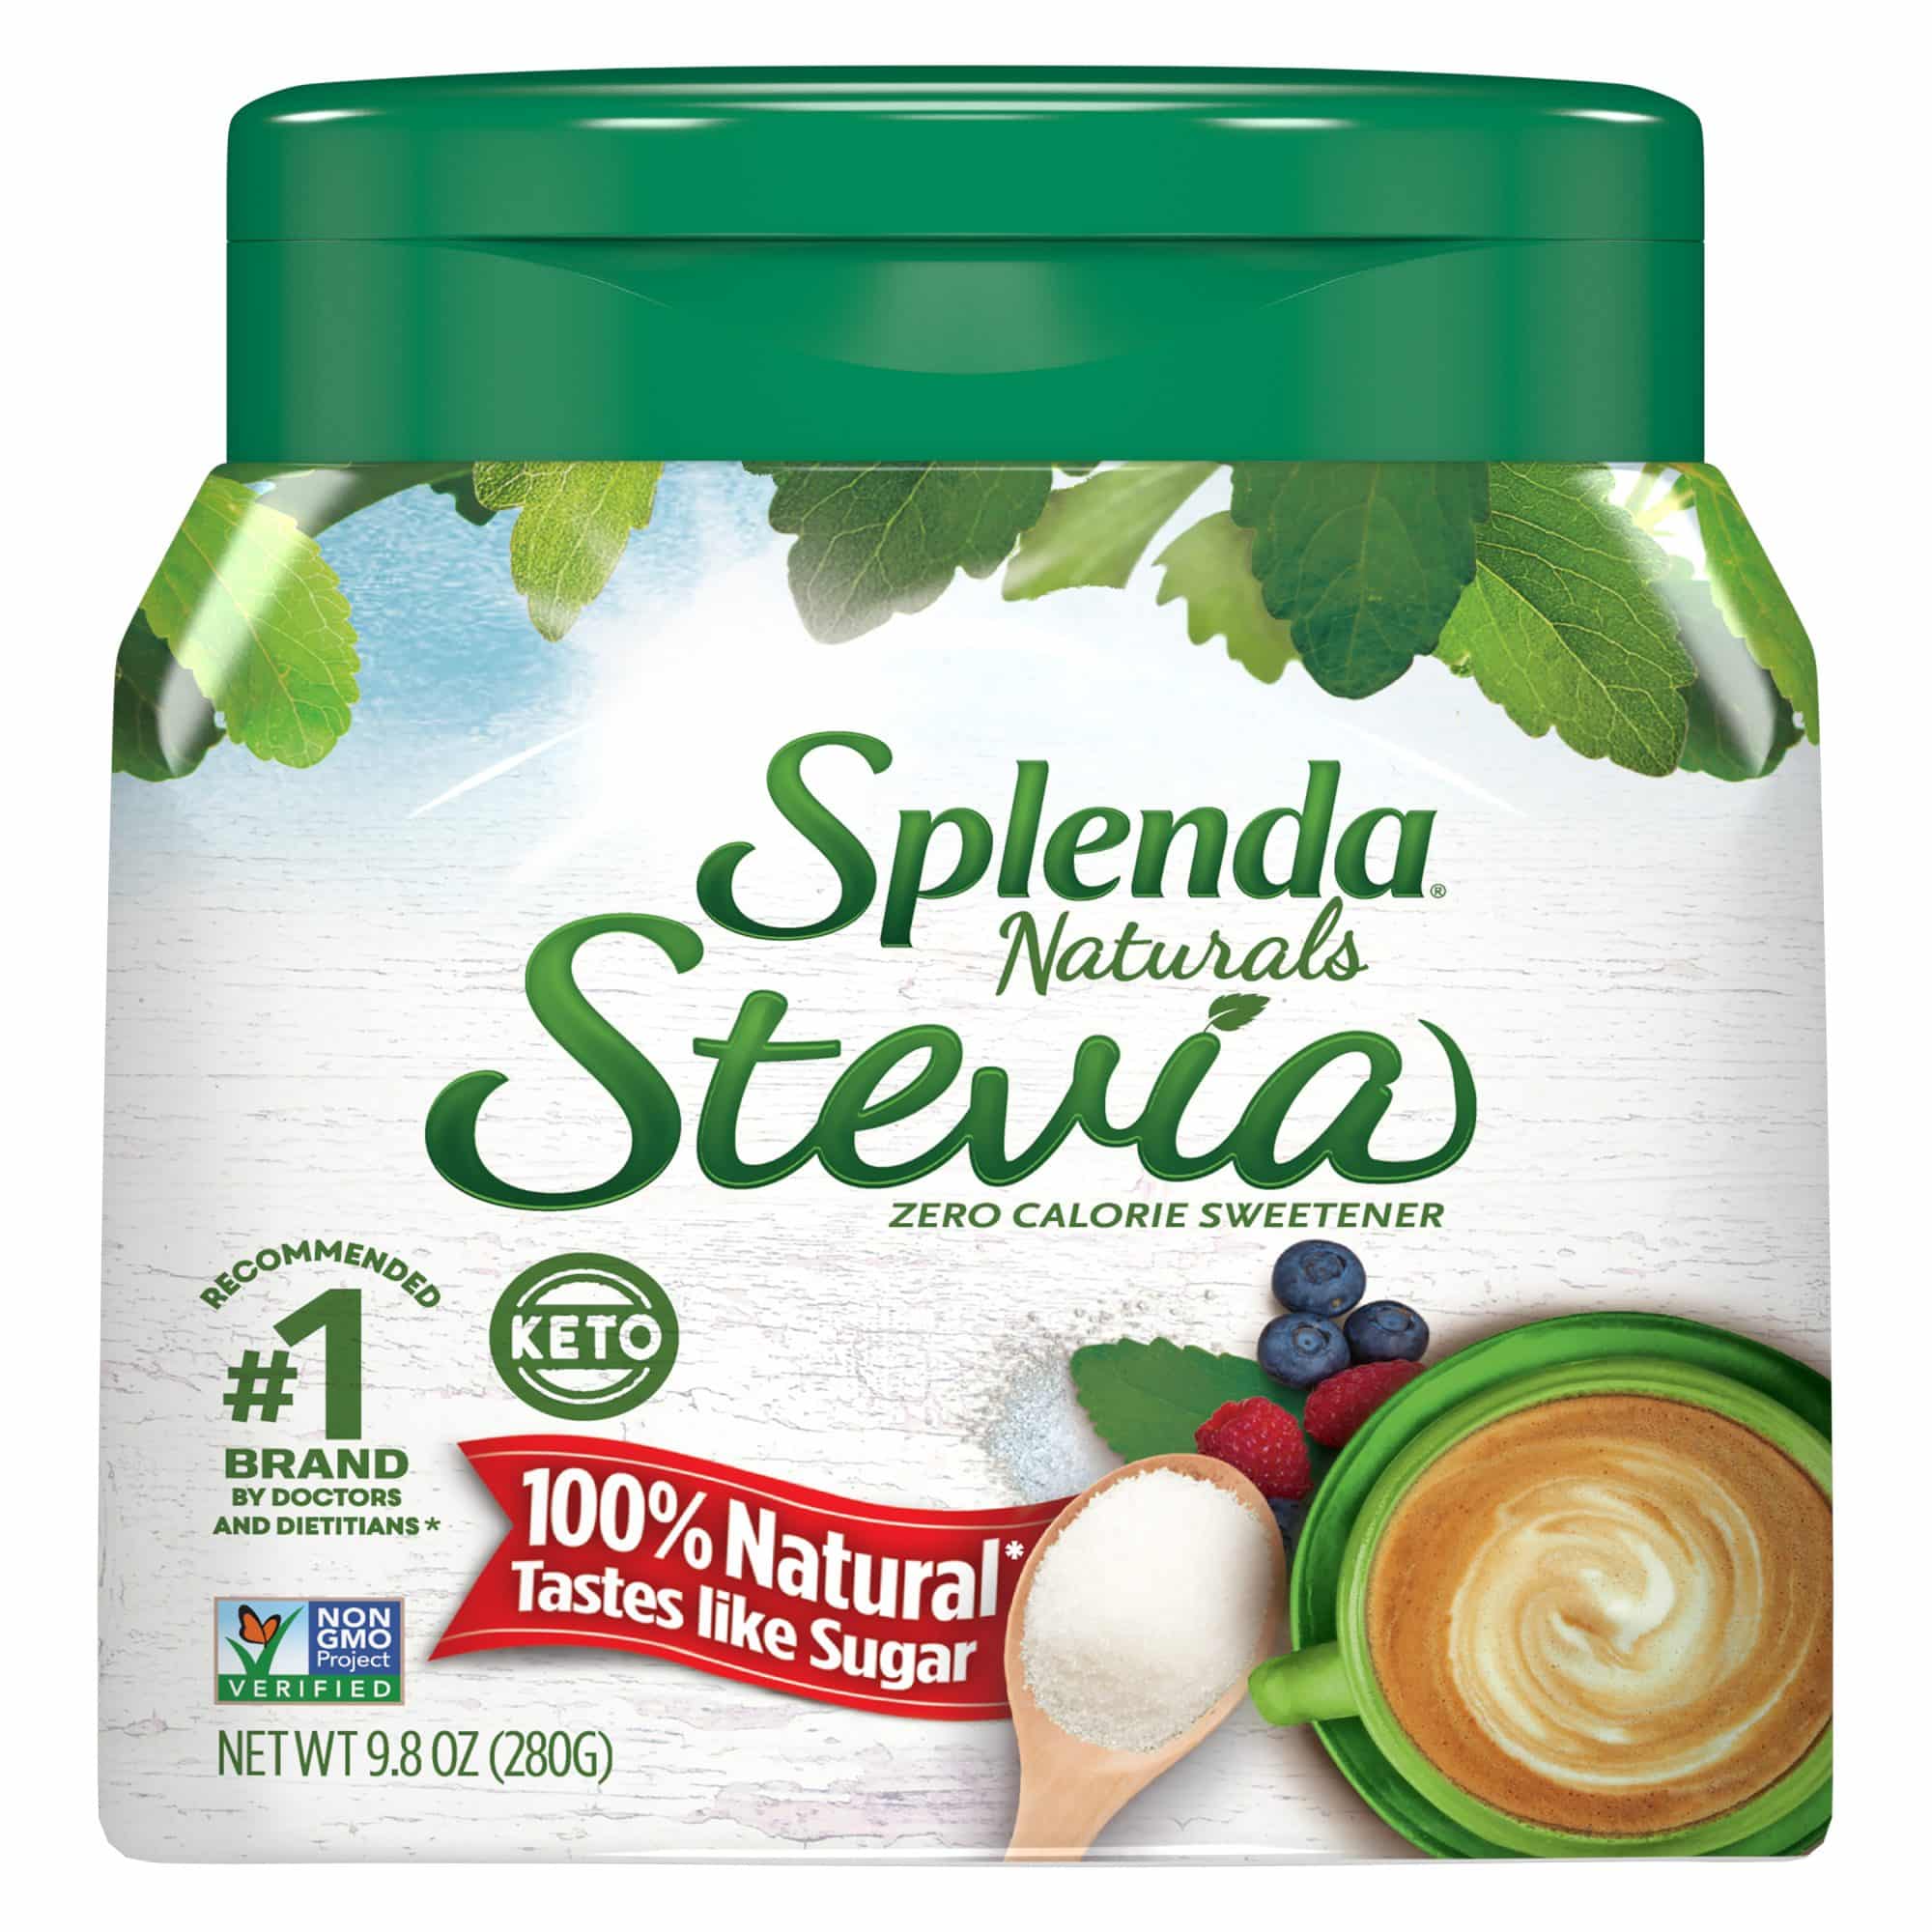 Splenda Endulzante con Stevia, en frasco